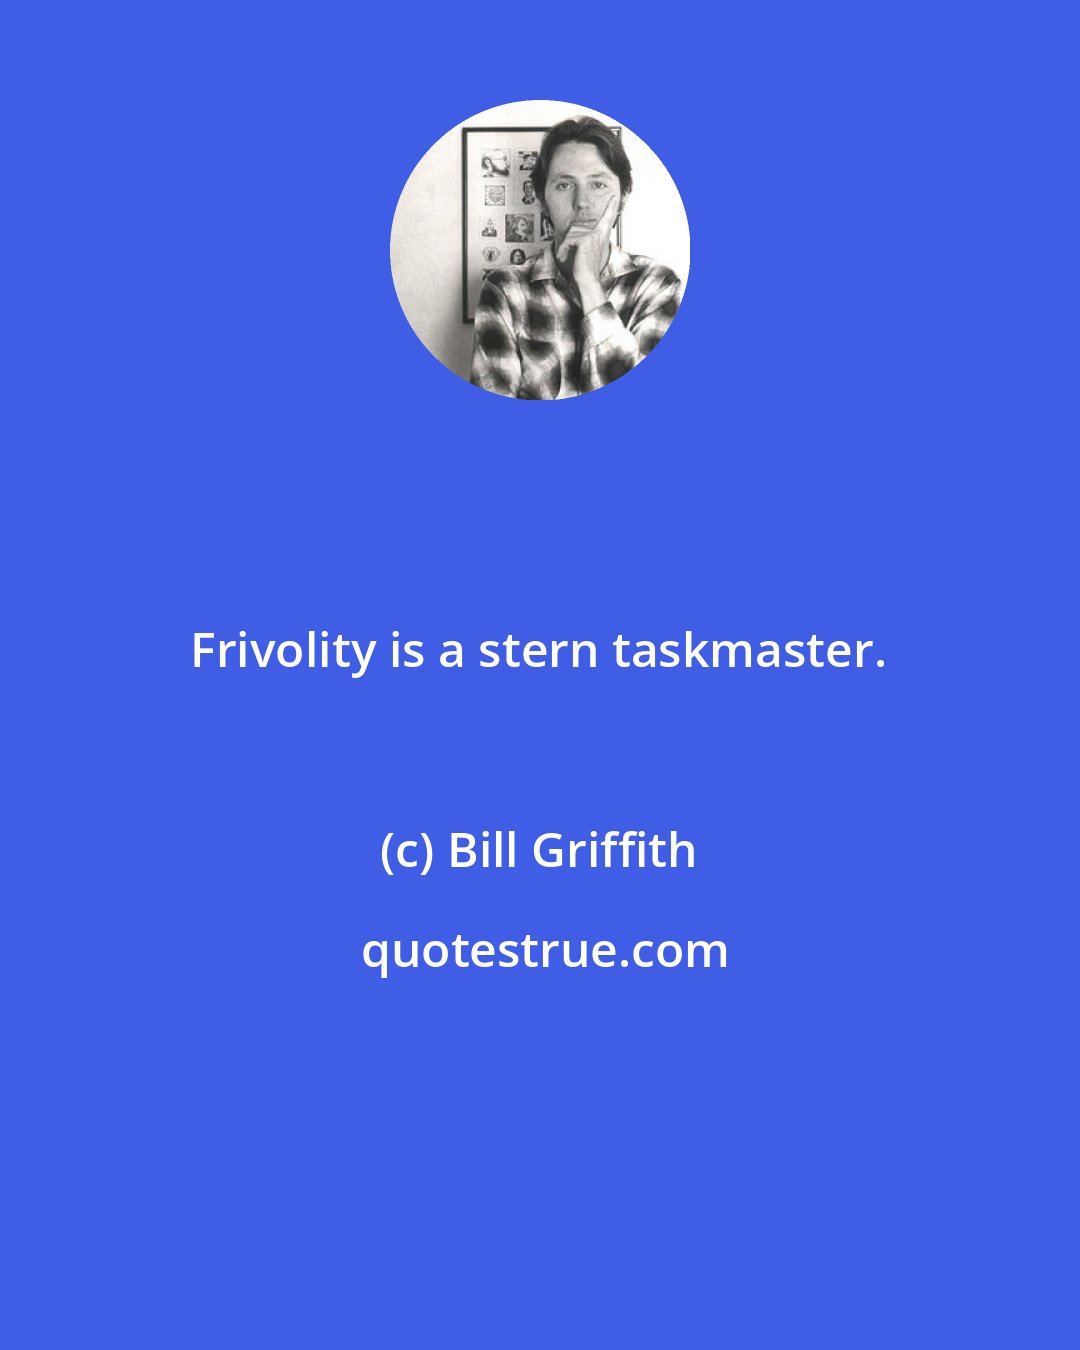 Bill Griffith: Frivolity is a stern taskmaster.